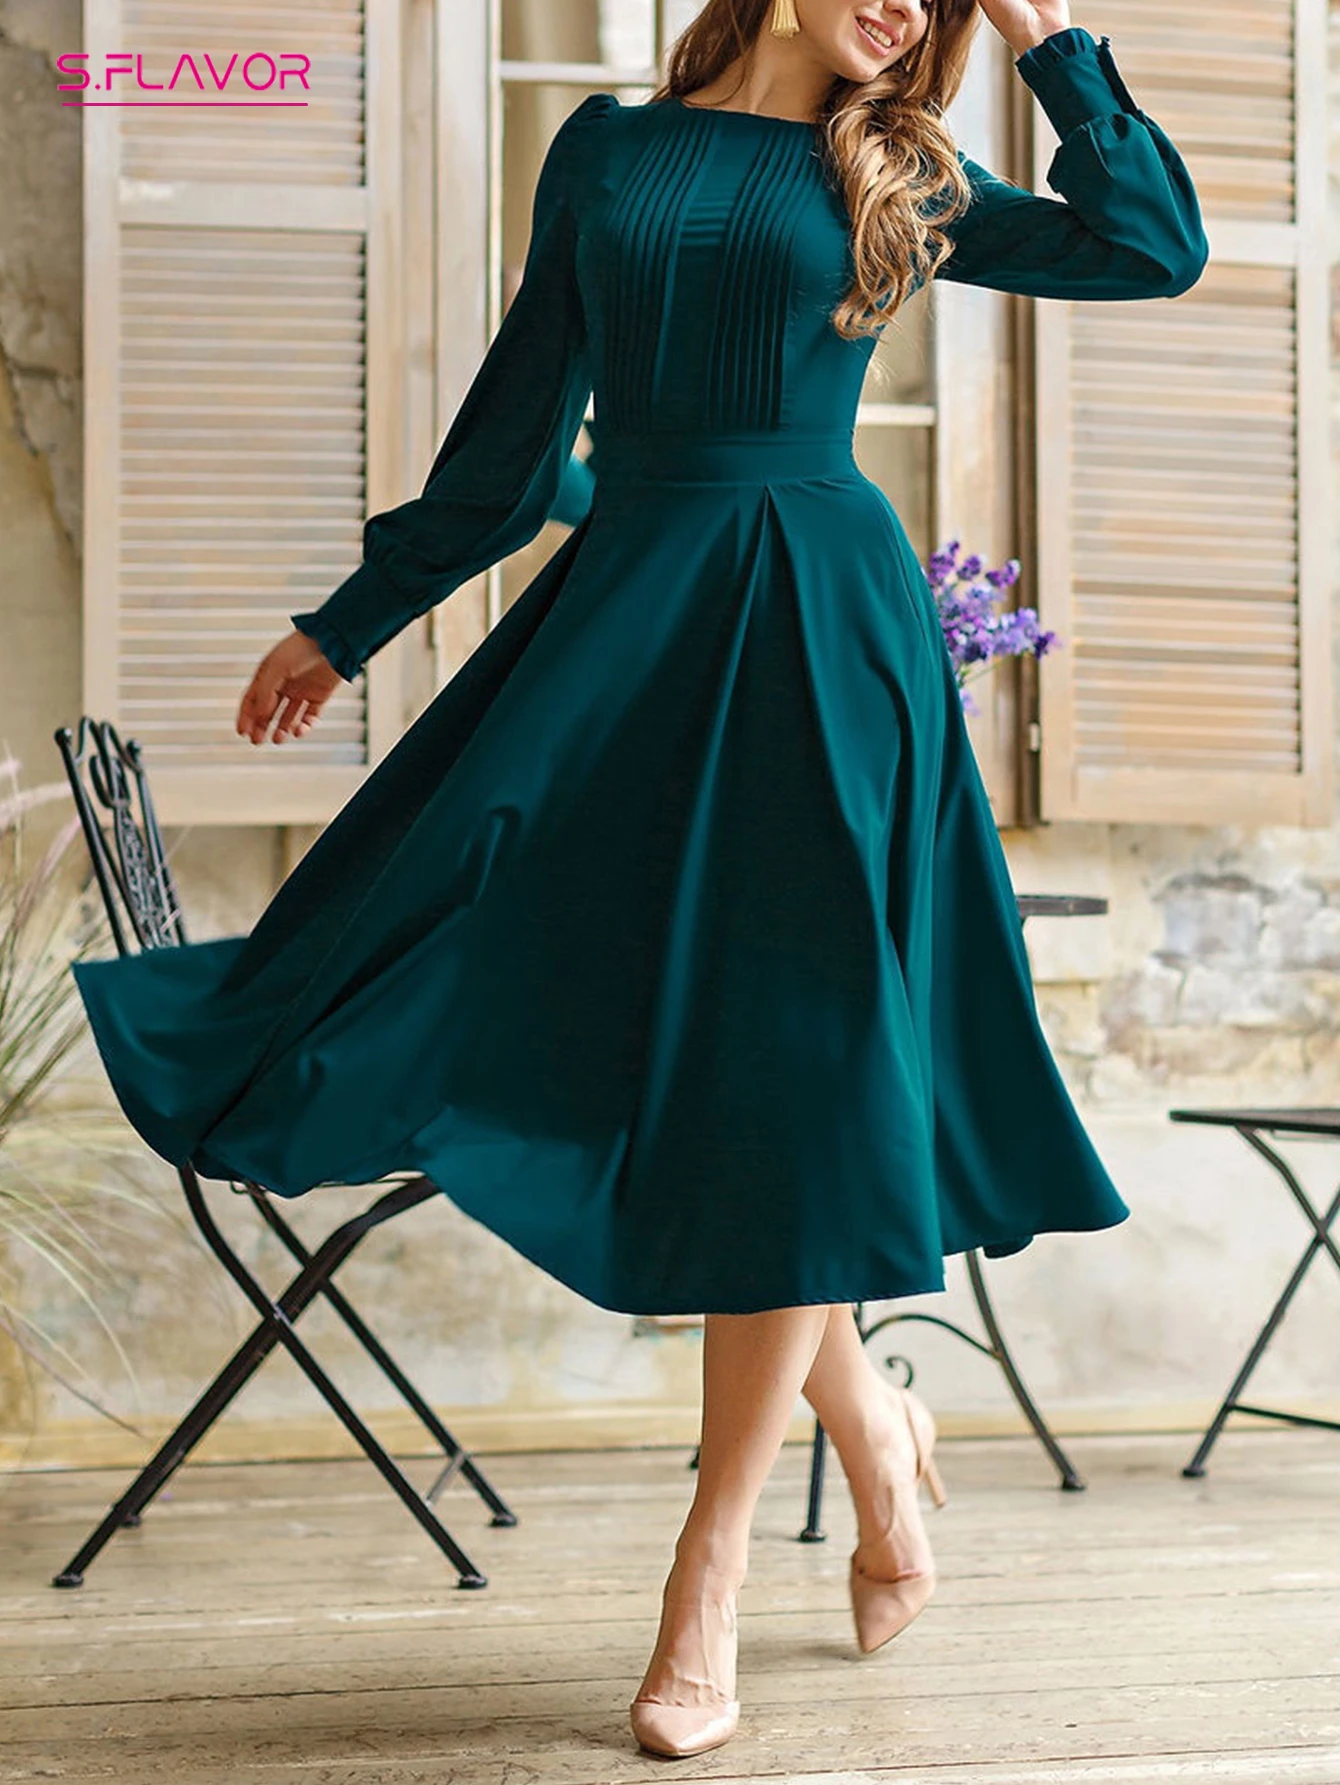 S.FLAVOR Women Vintage Solid Color Winter Dress Elegant Green Long Sleeve Pleated Midi Vestidos 2021 Autumn Casual Dresses